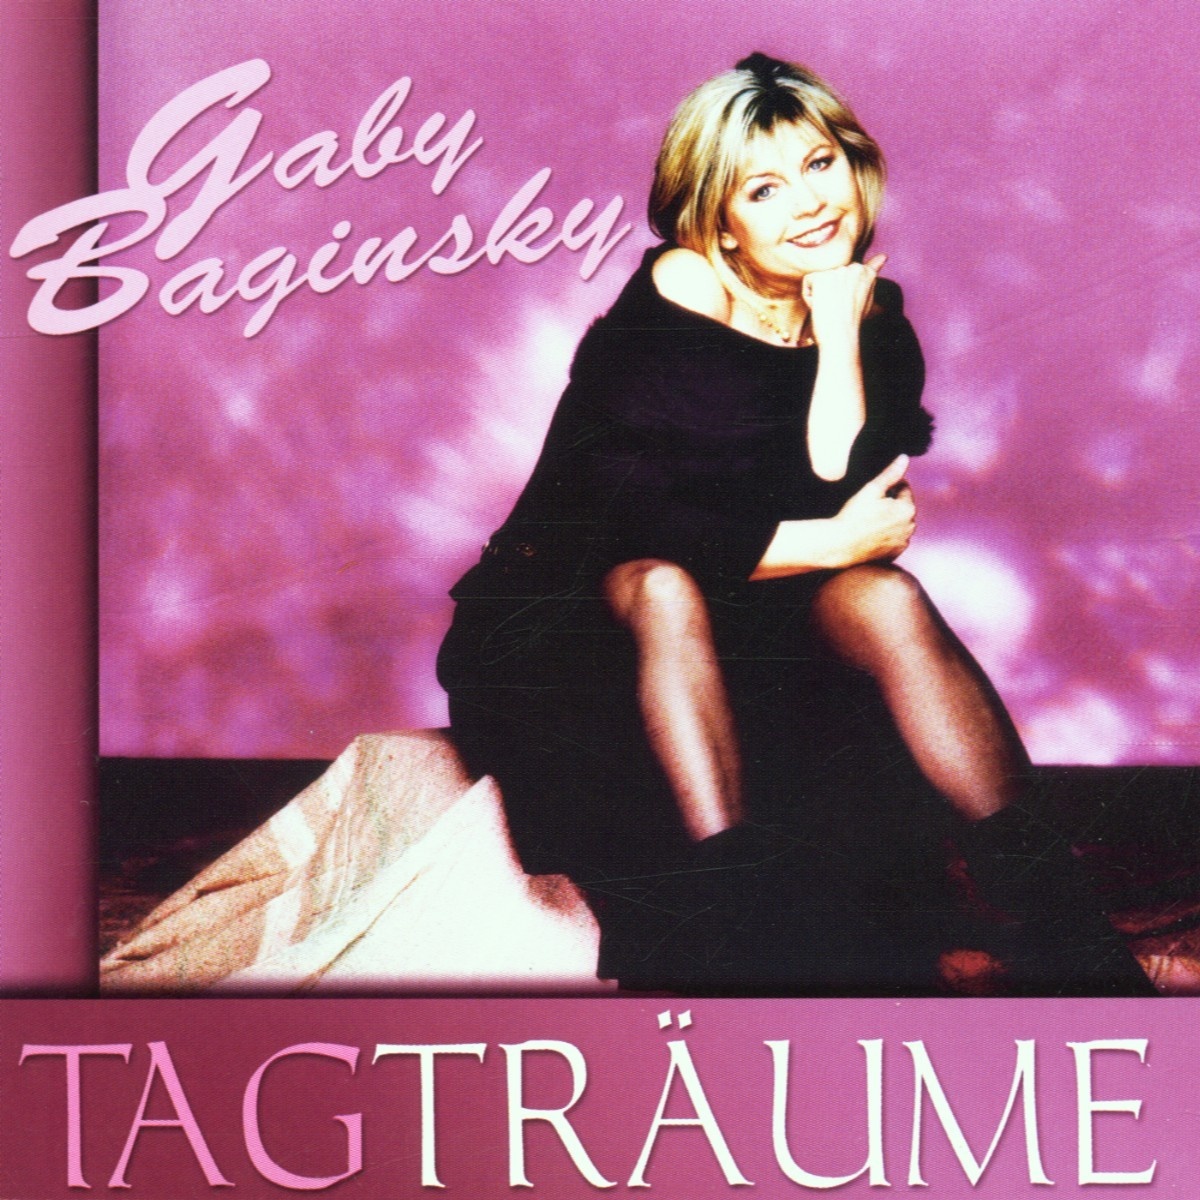 Tagträume - Gaby Baginsky. (CD)